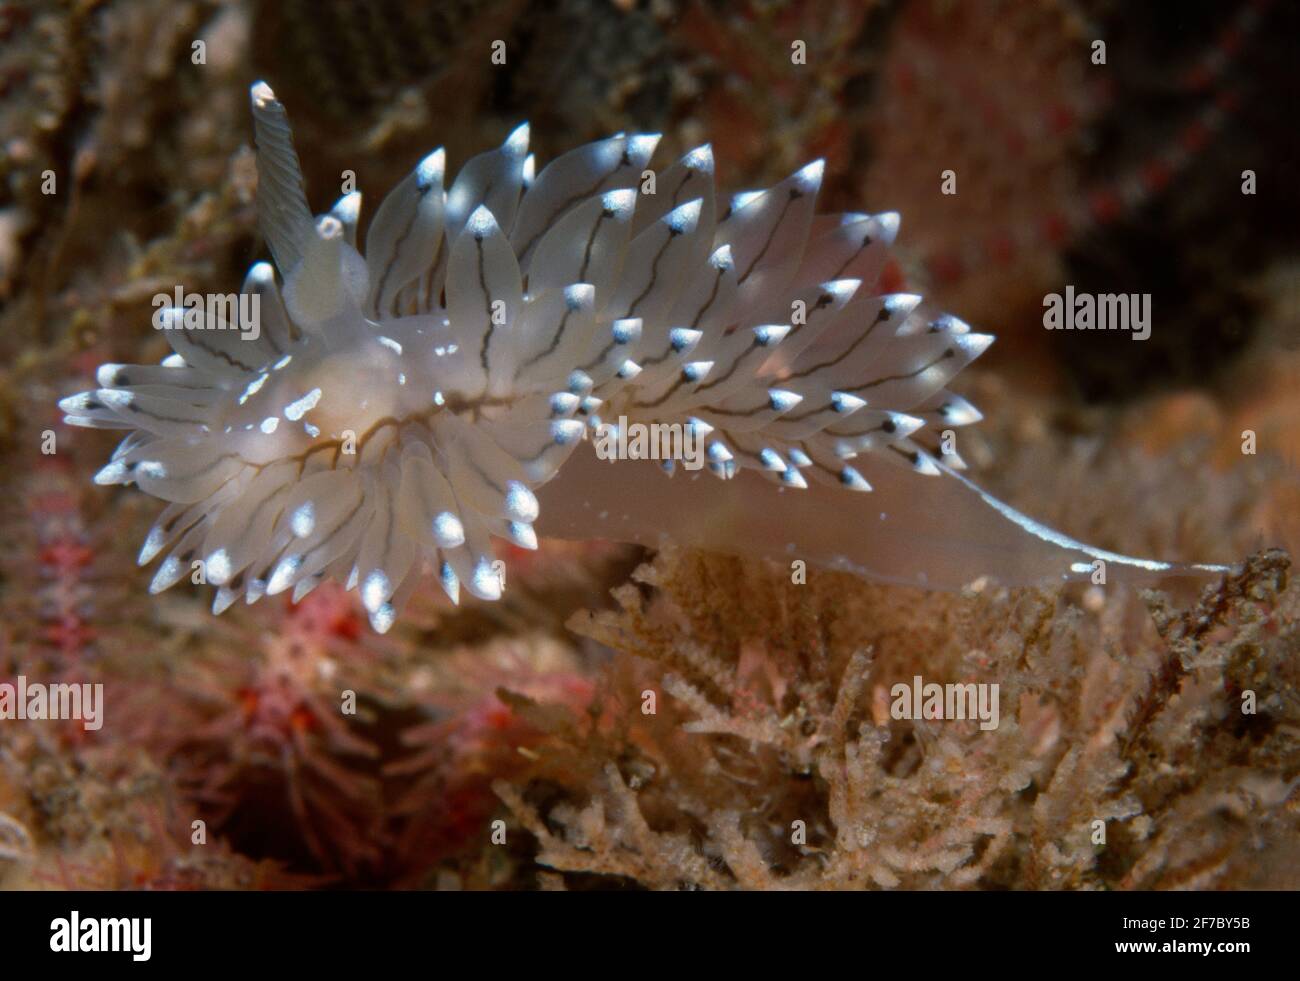 Nudibranch or sea slug (Antiopella cristata) on bryozoan turf, UK. Stock Photo